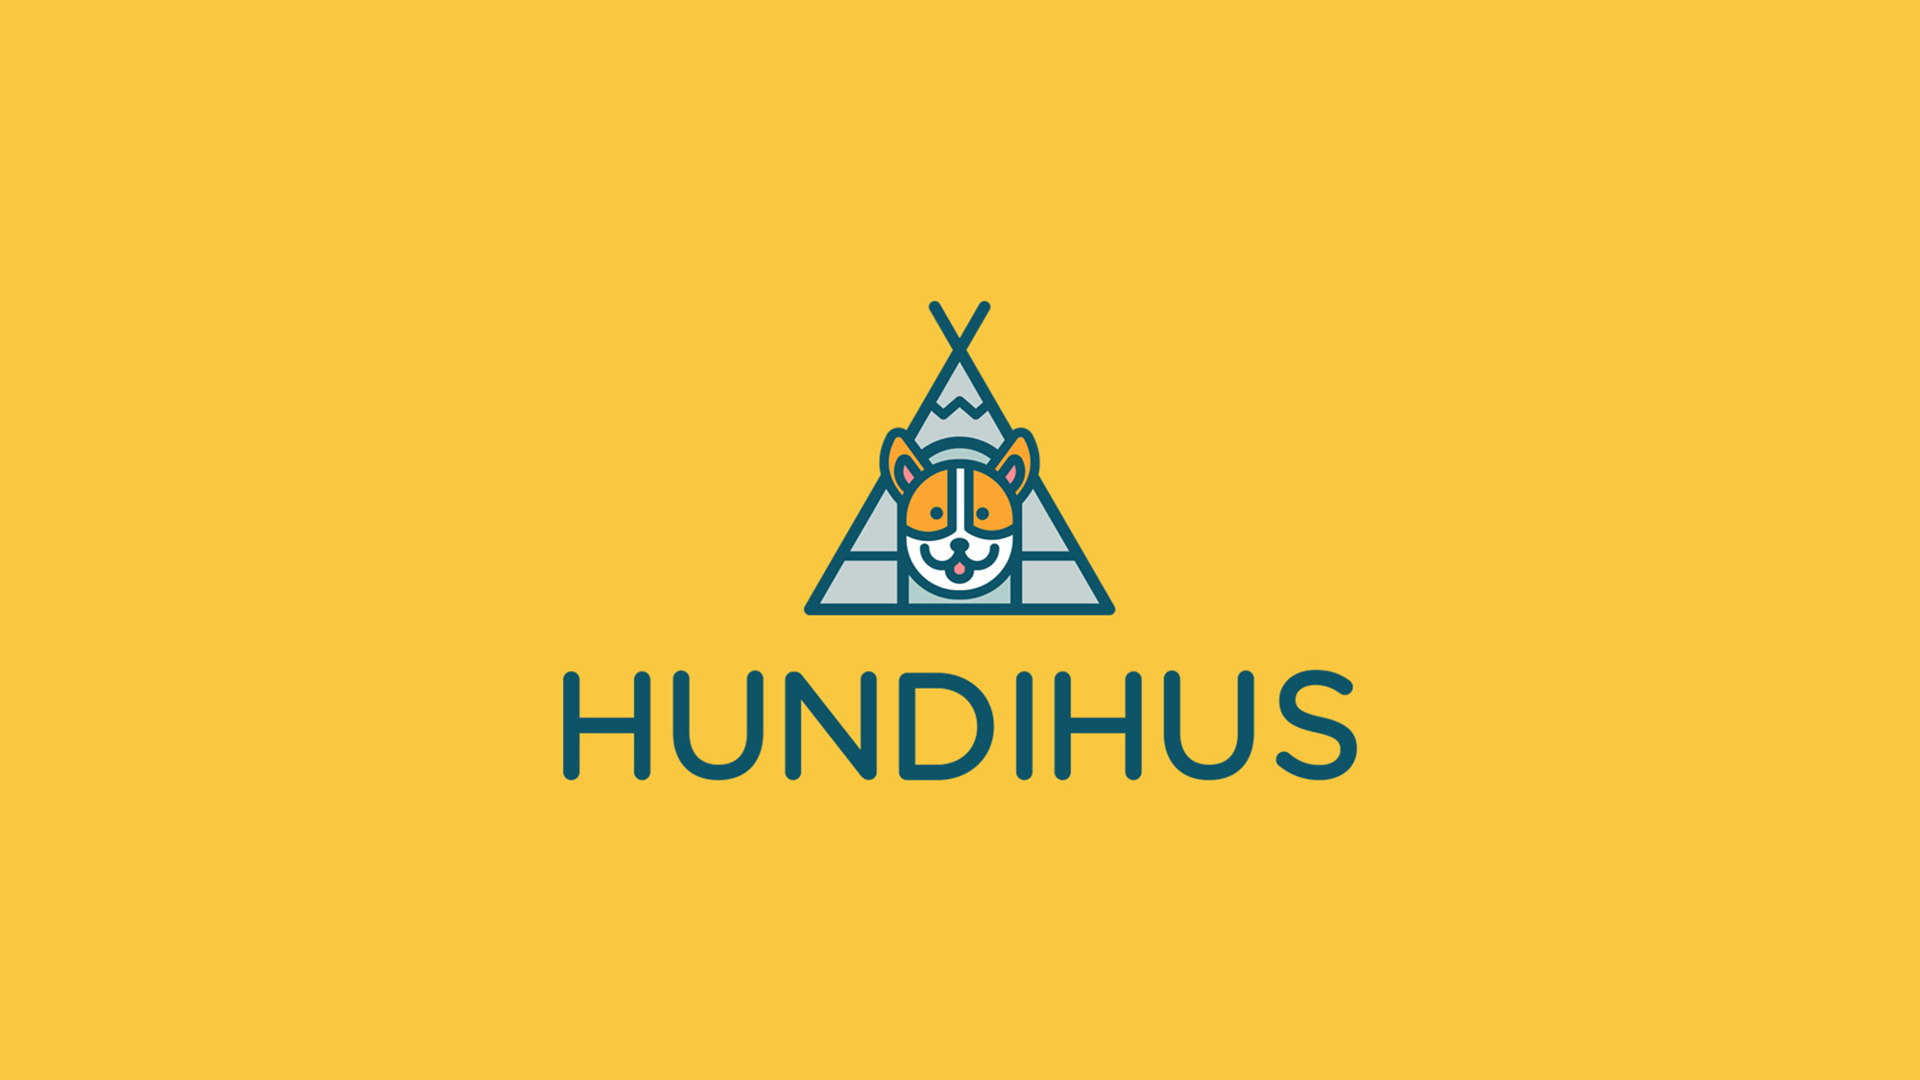 hundihus-naming-logo-kiwiids-marketing-digital